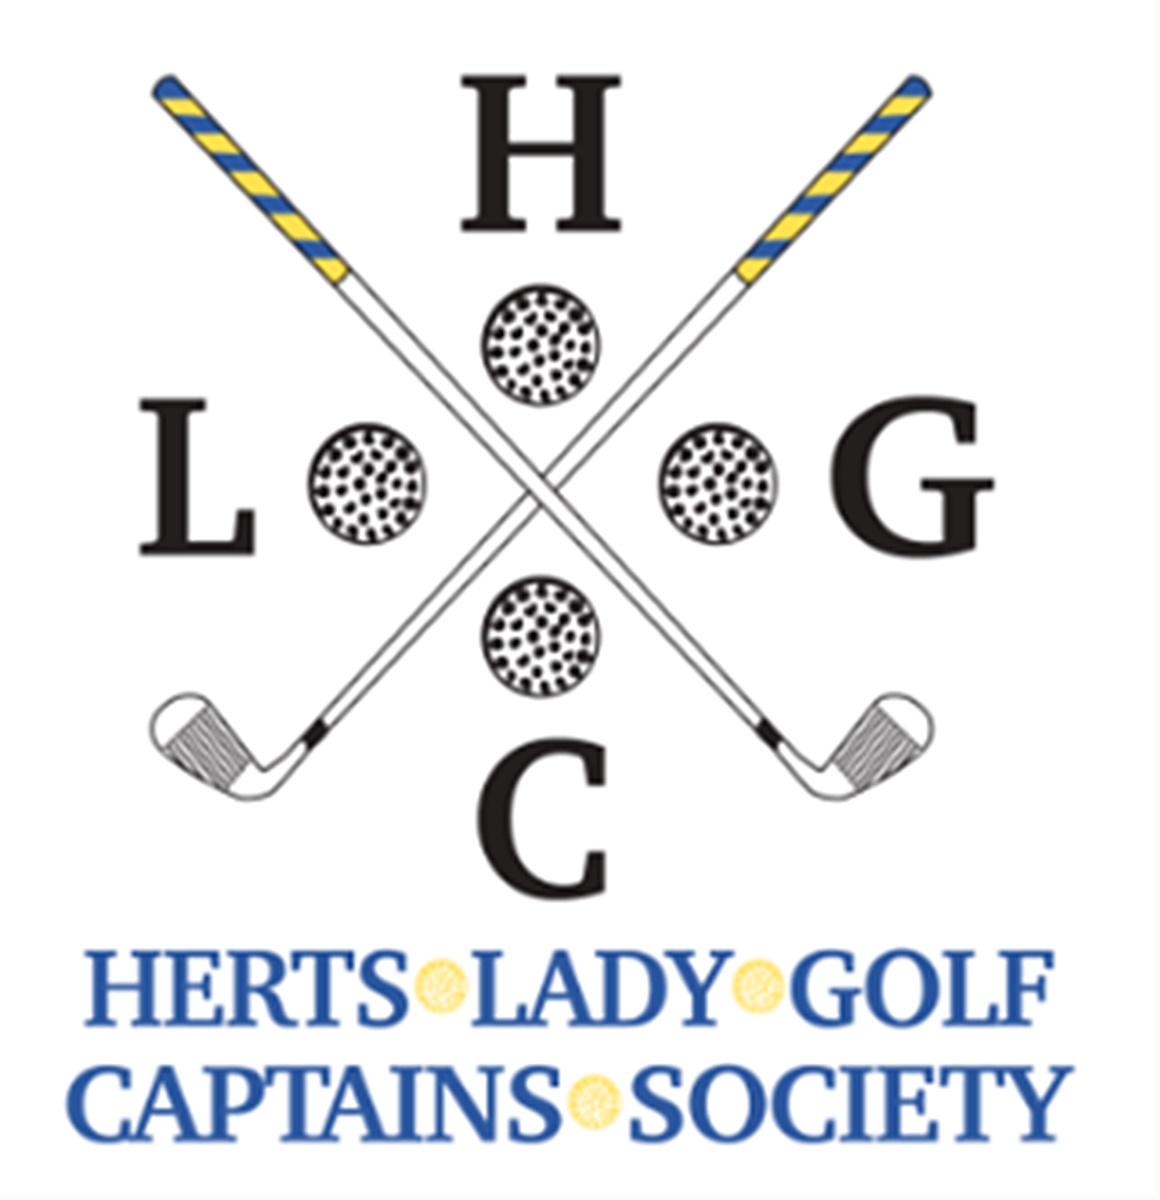 HLGCS logo 1160x1200